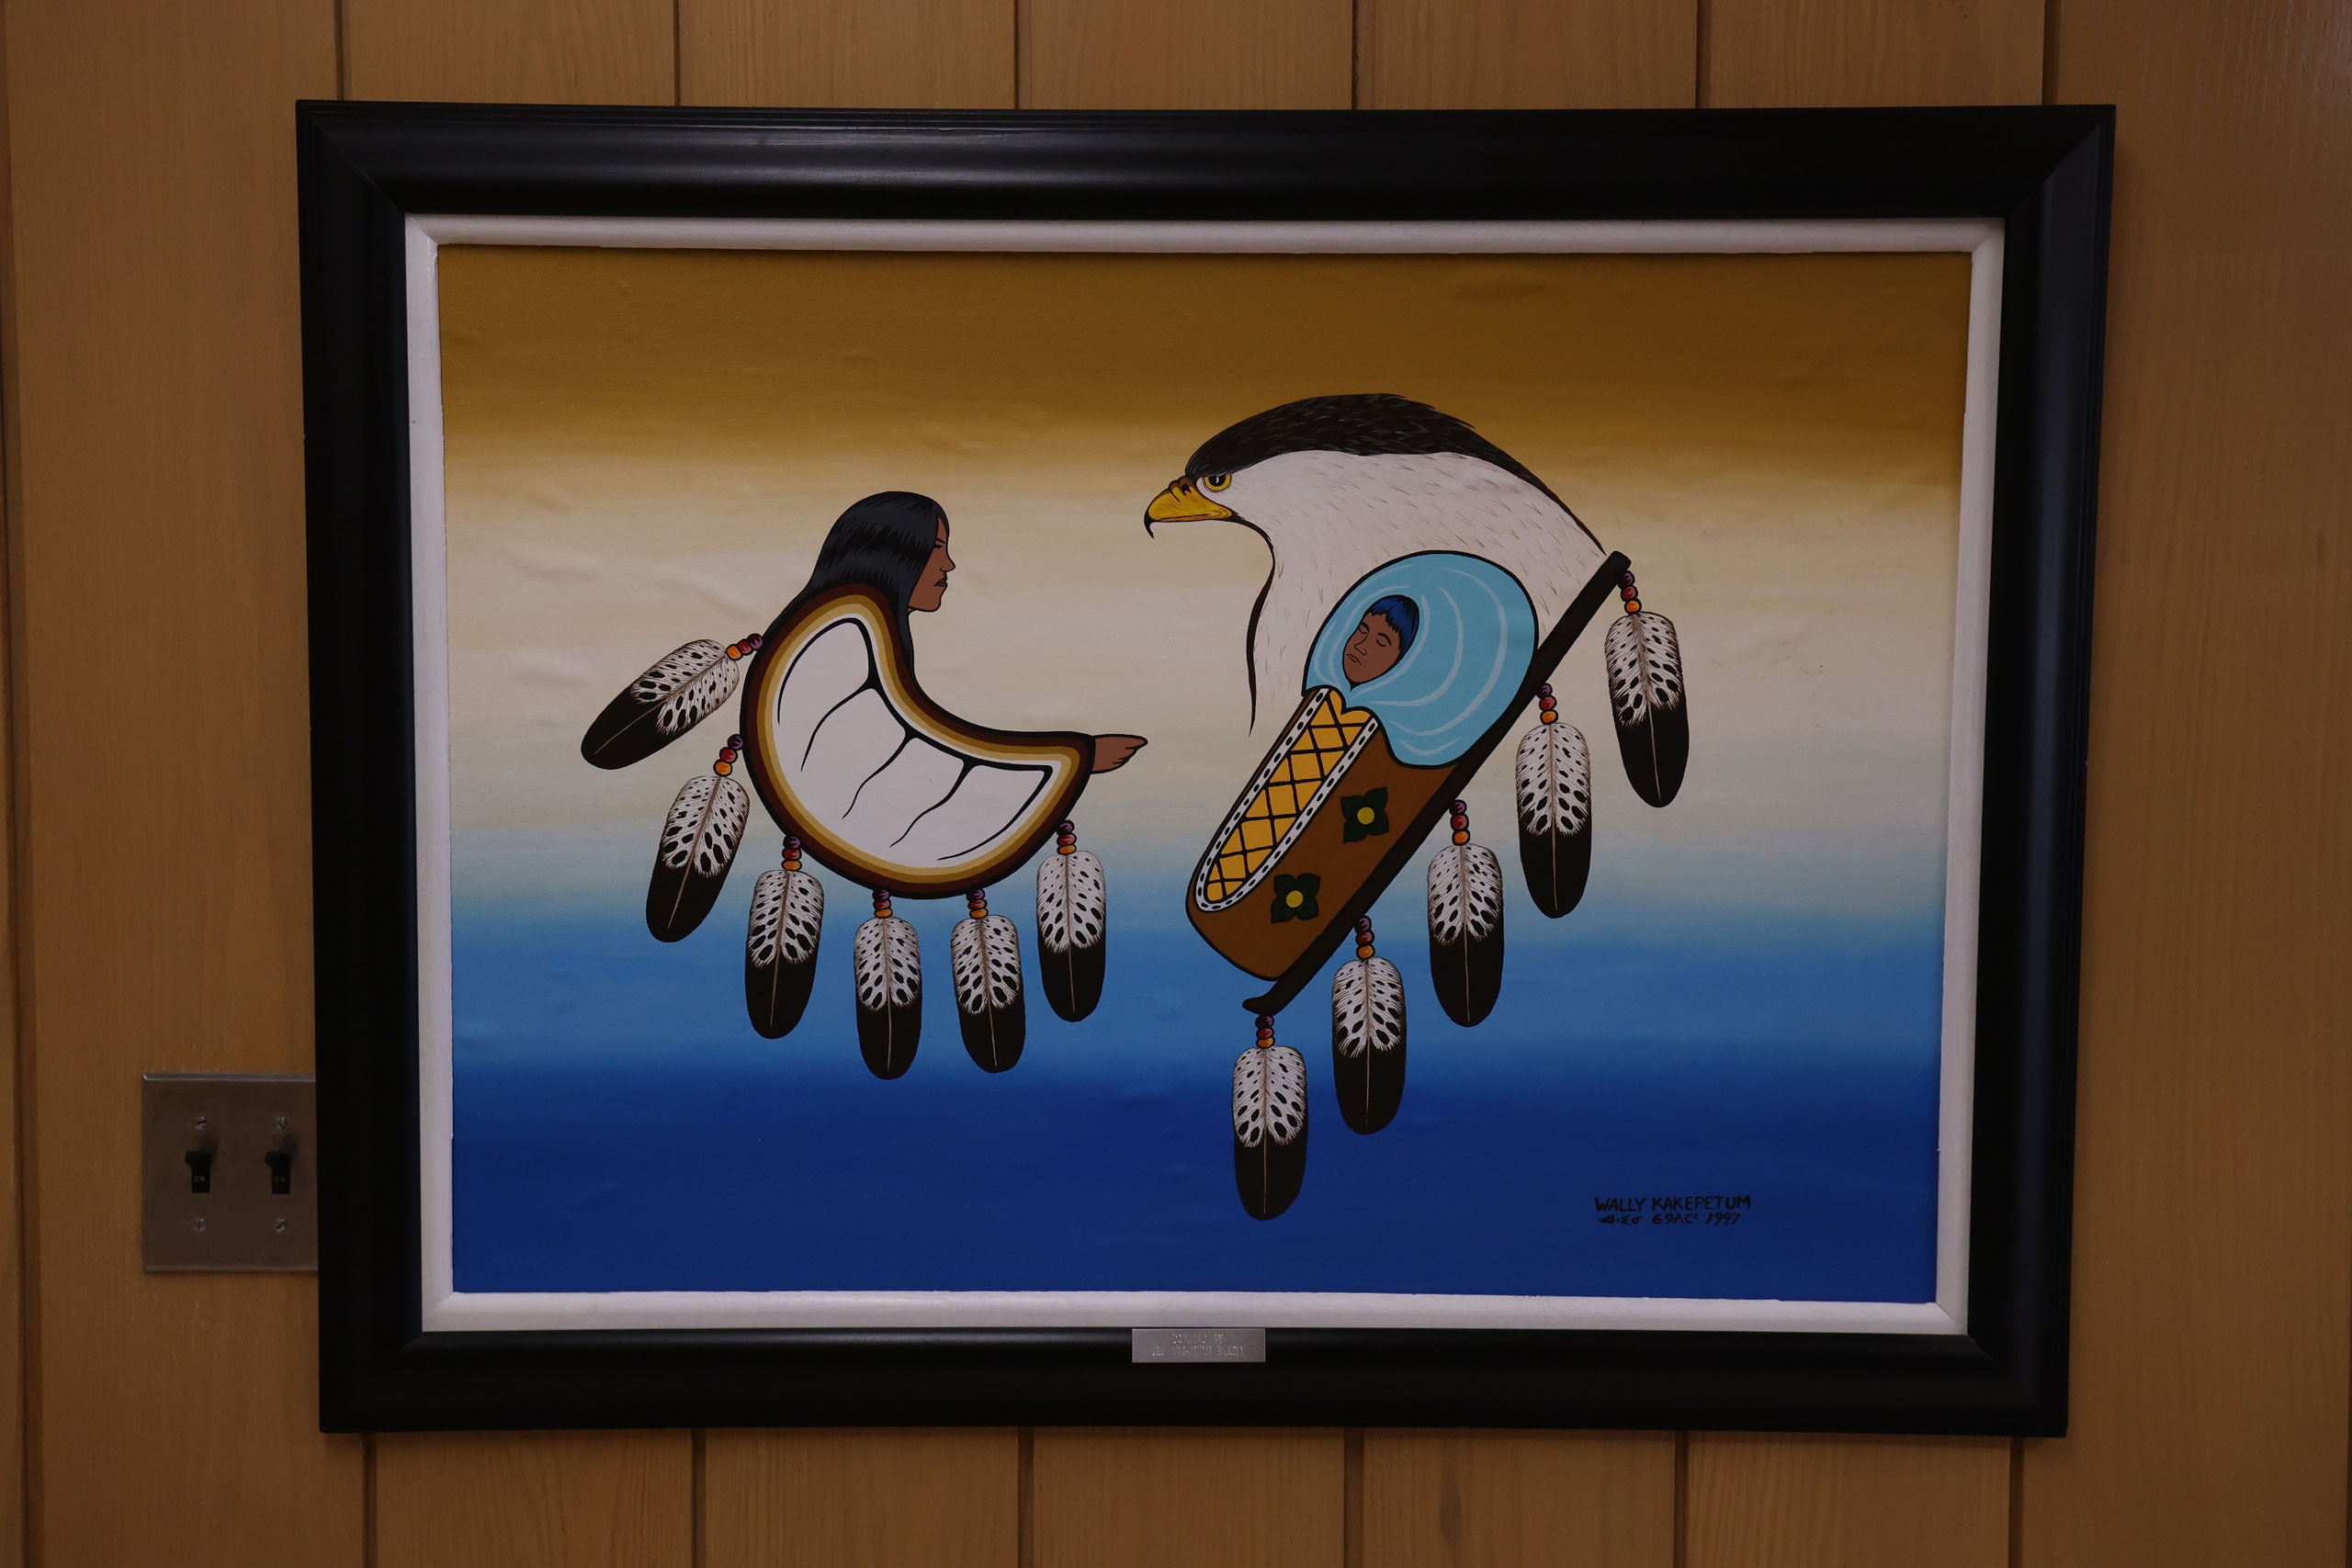 Indigenous art